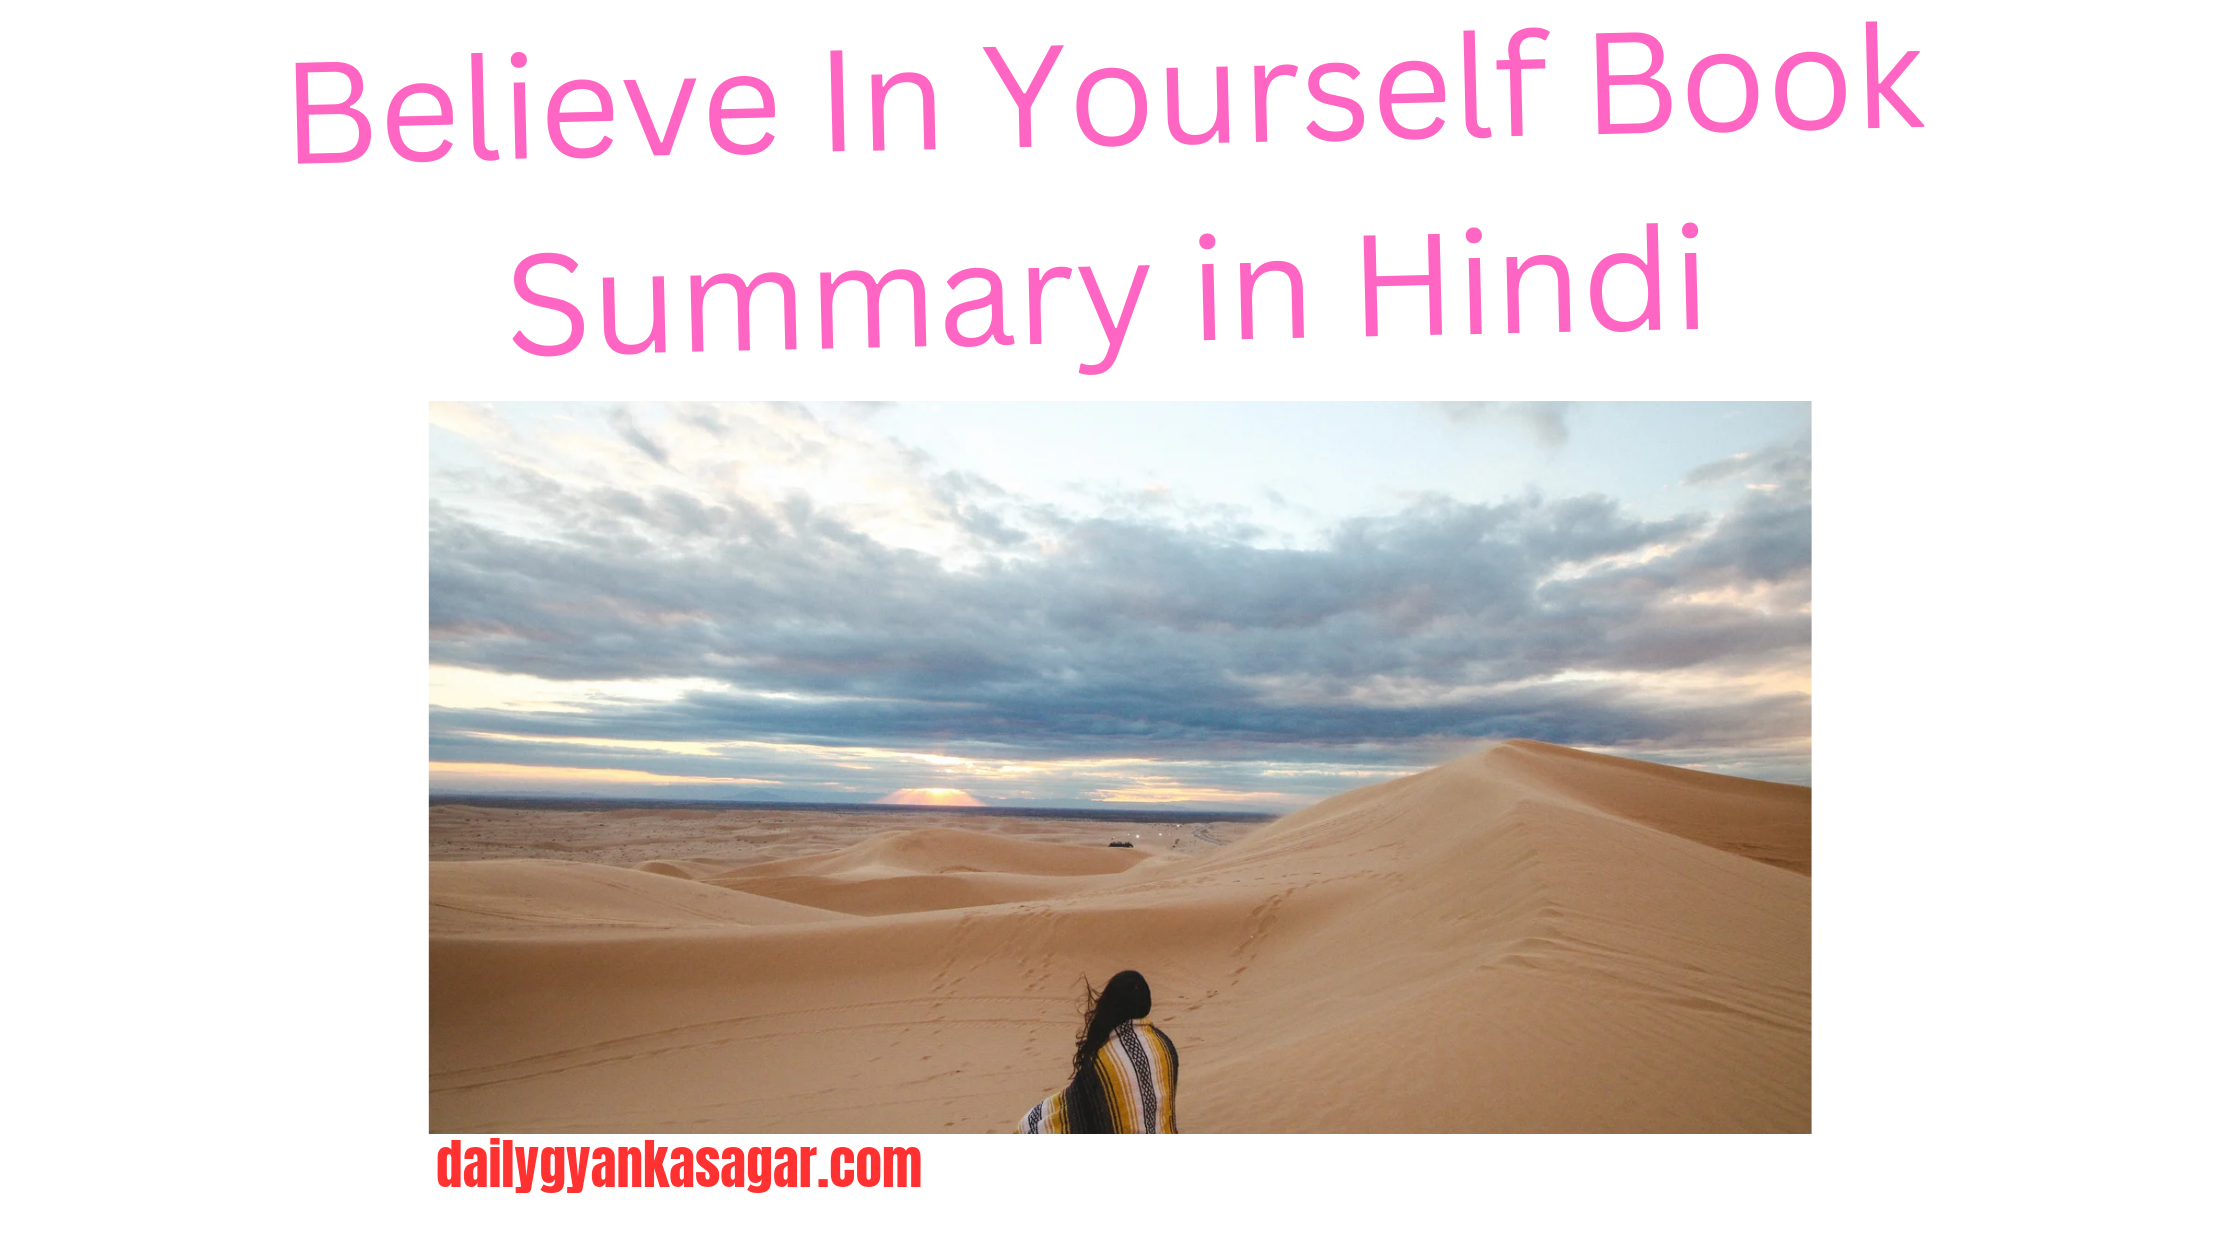 Believe in yourself book summary in Hindi